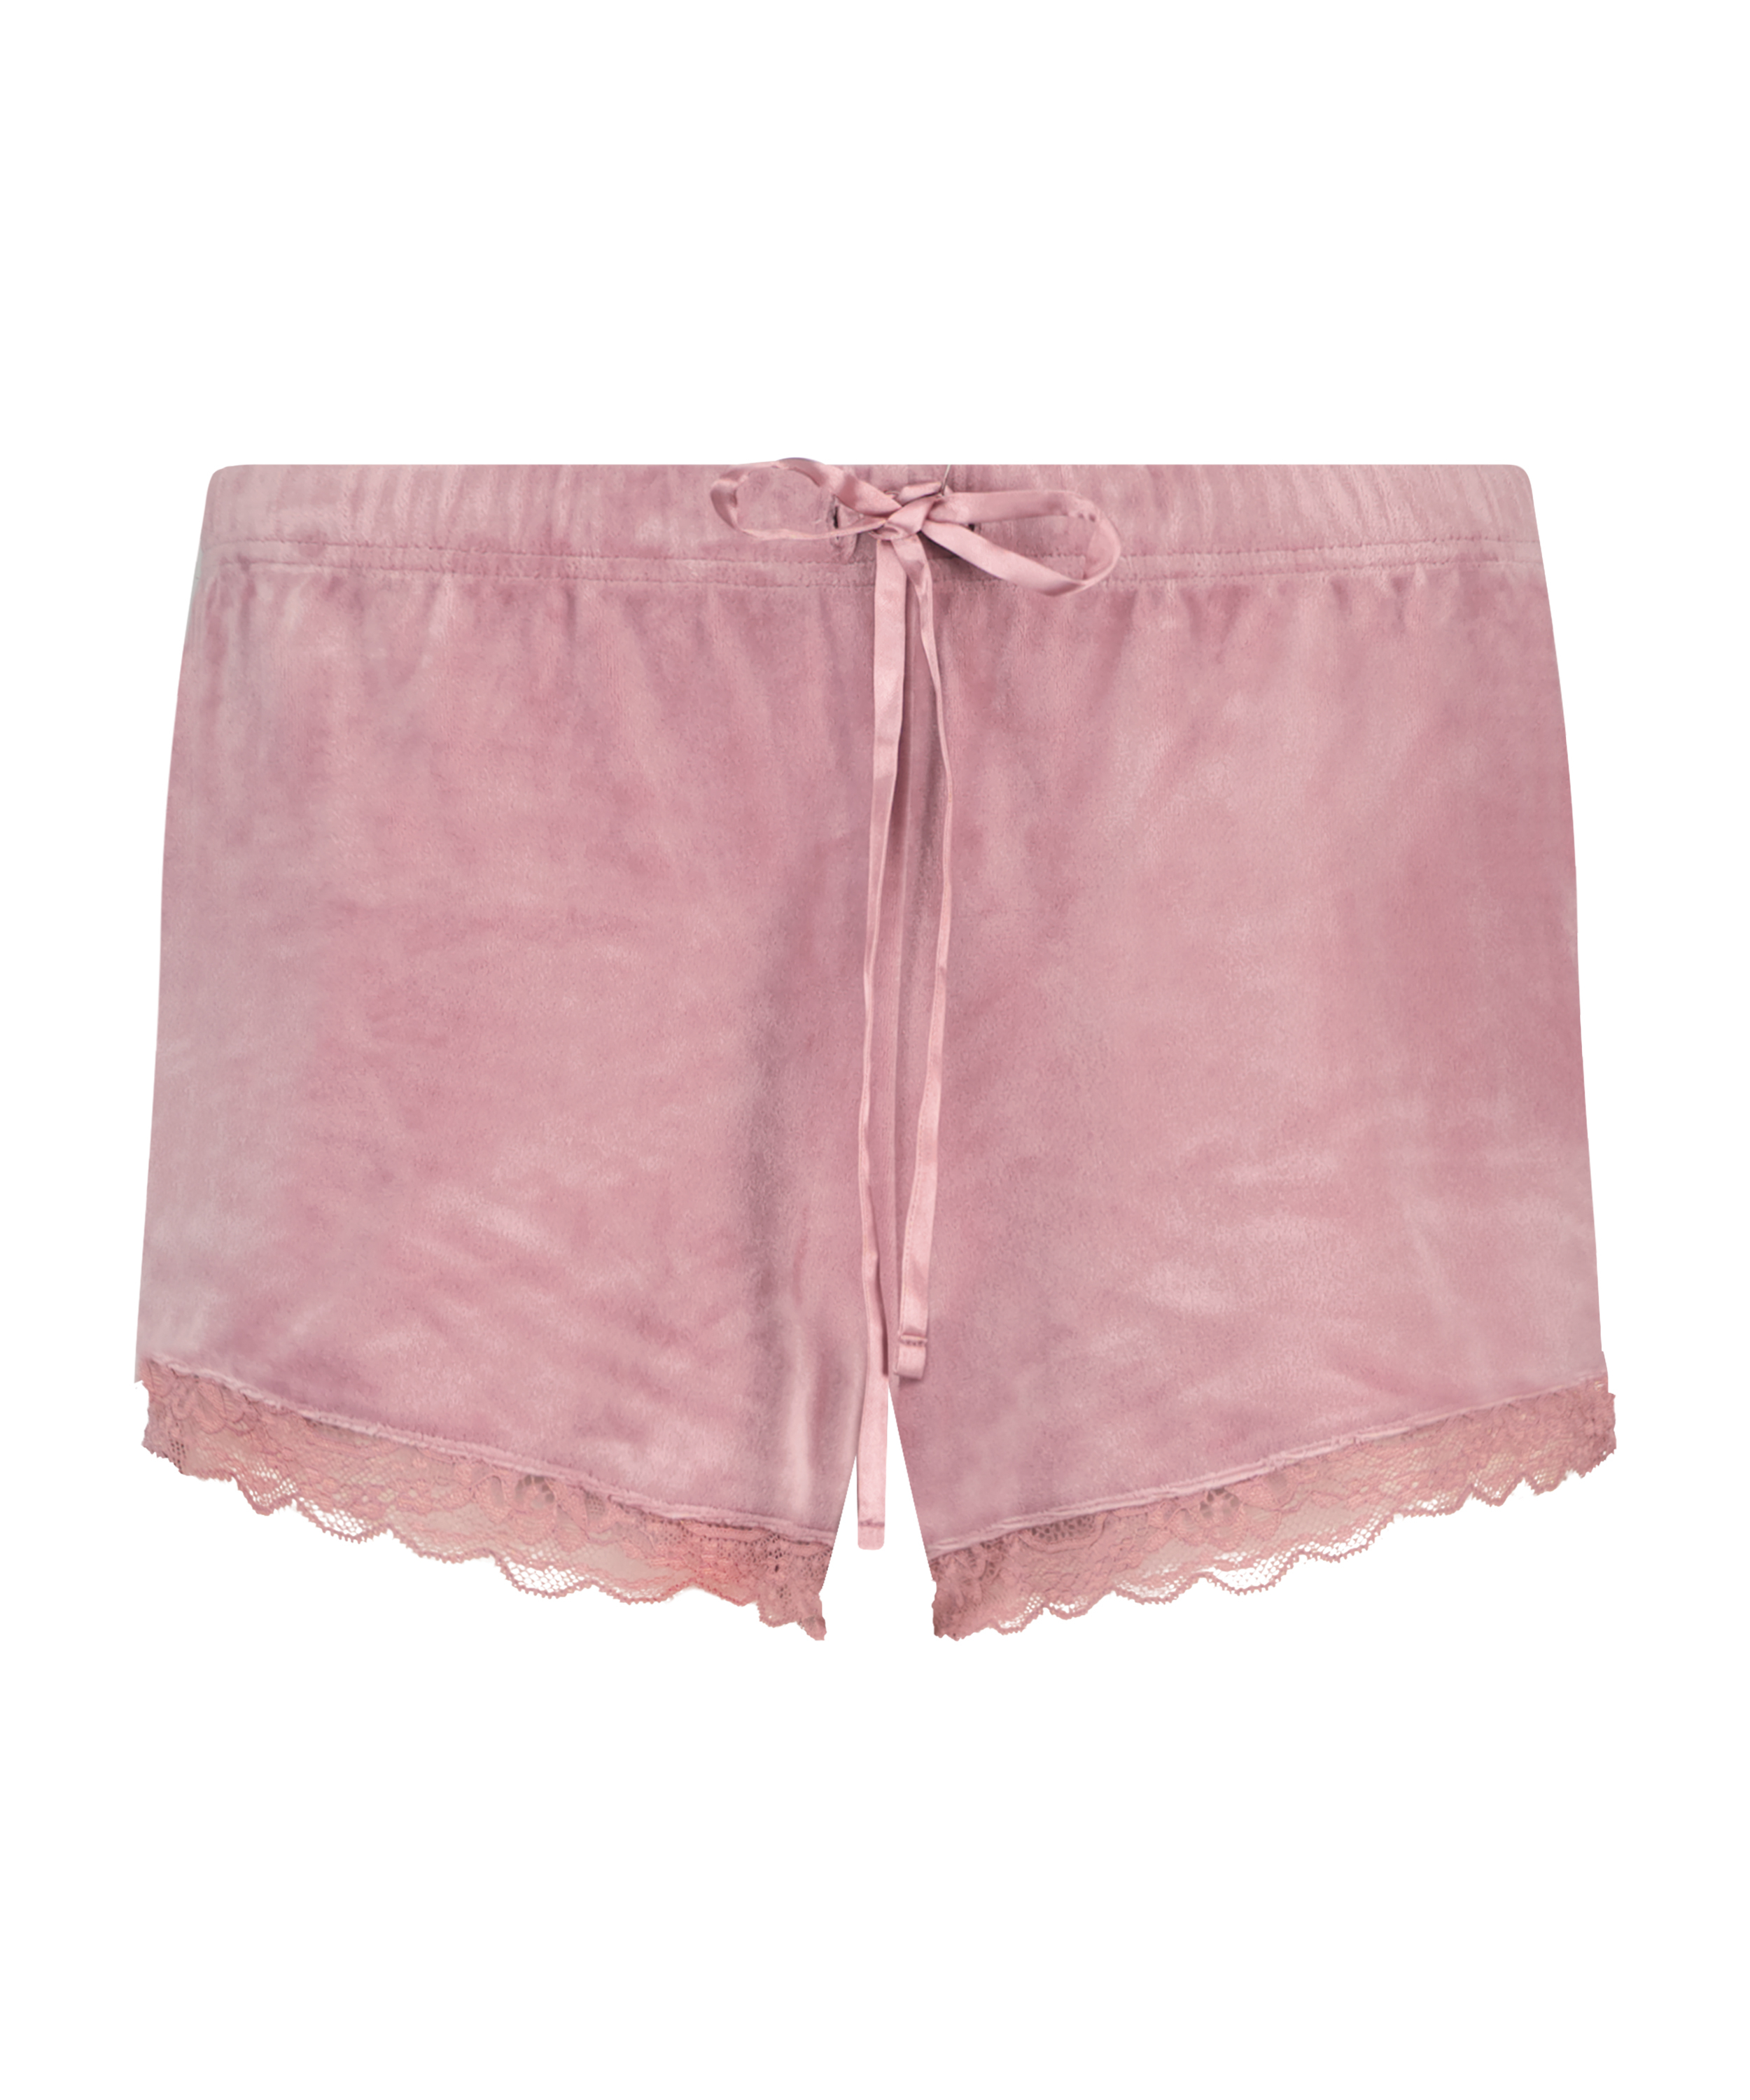 Velvet Lace Shorts, Pink, main